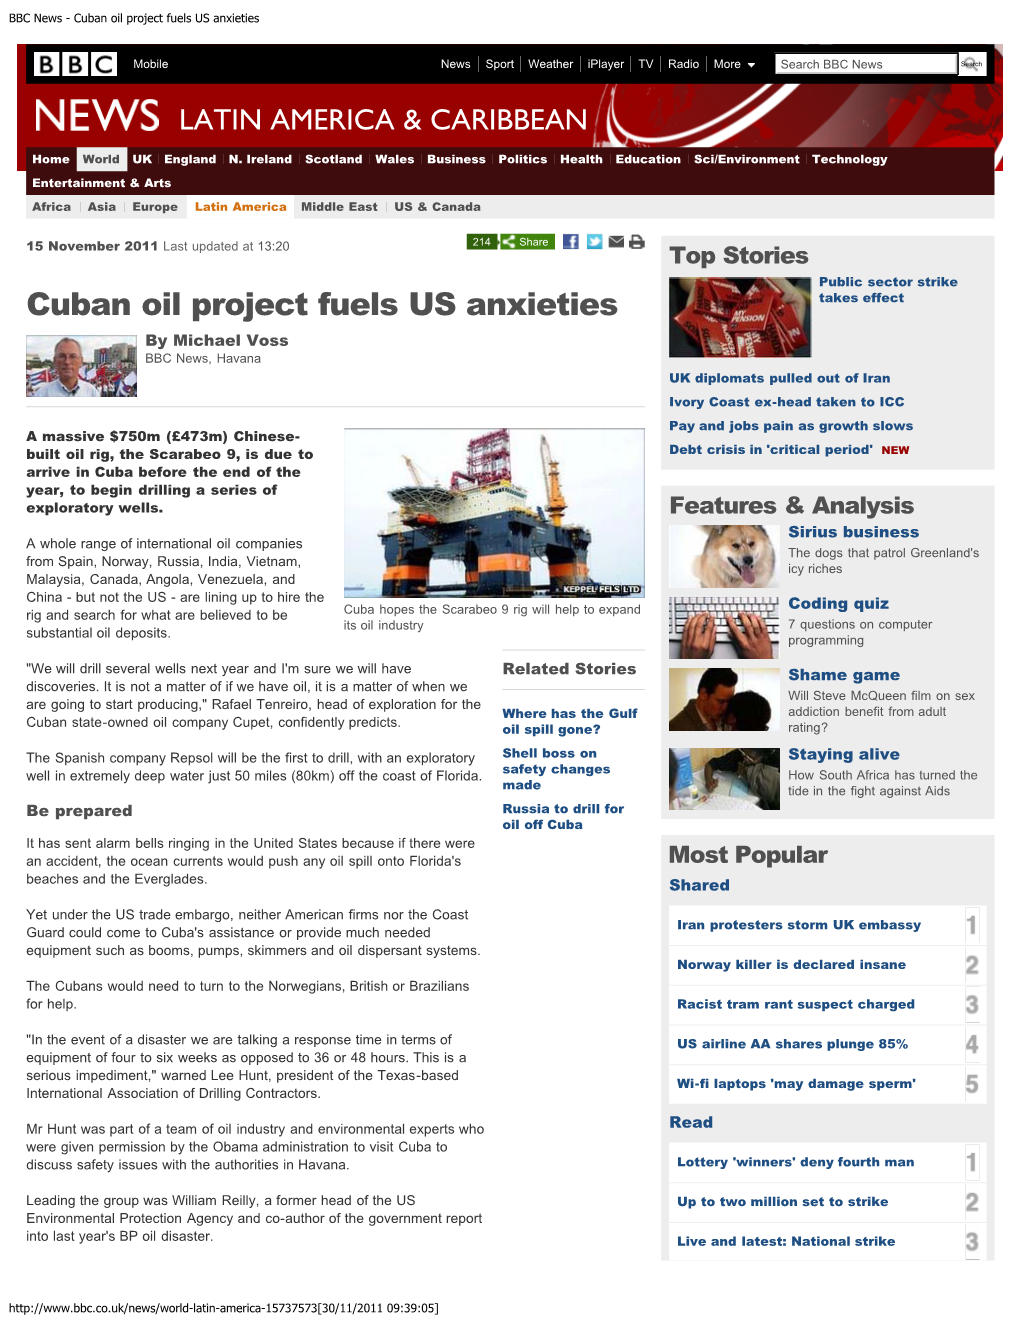 Cuban Oil Project Fuels US Anxieties